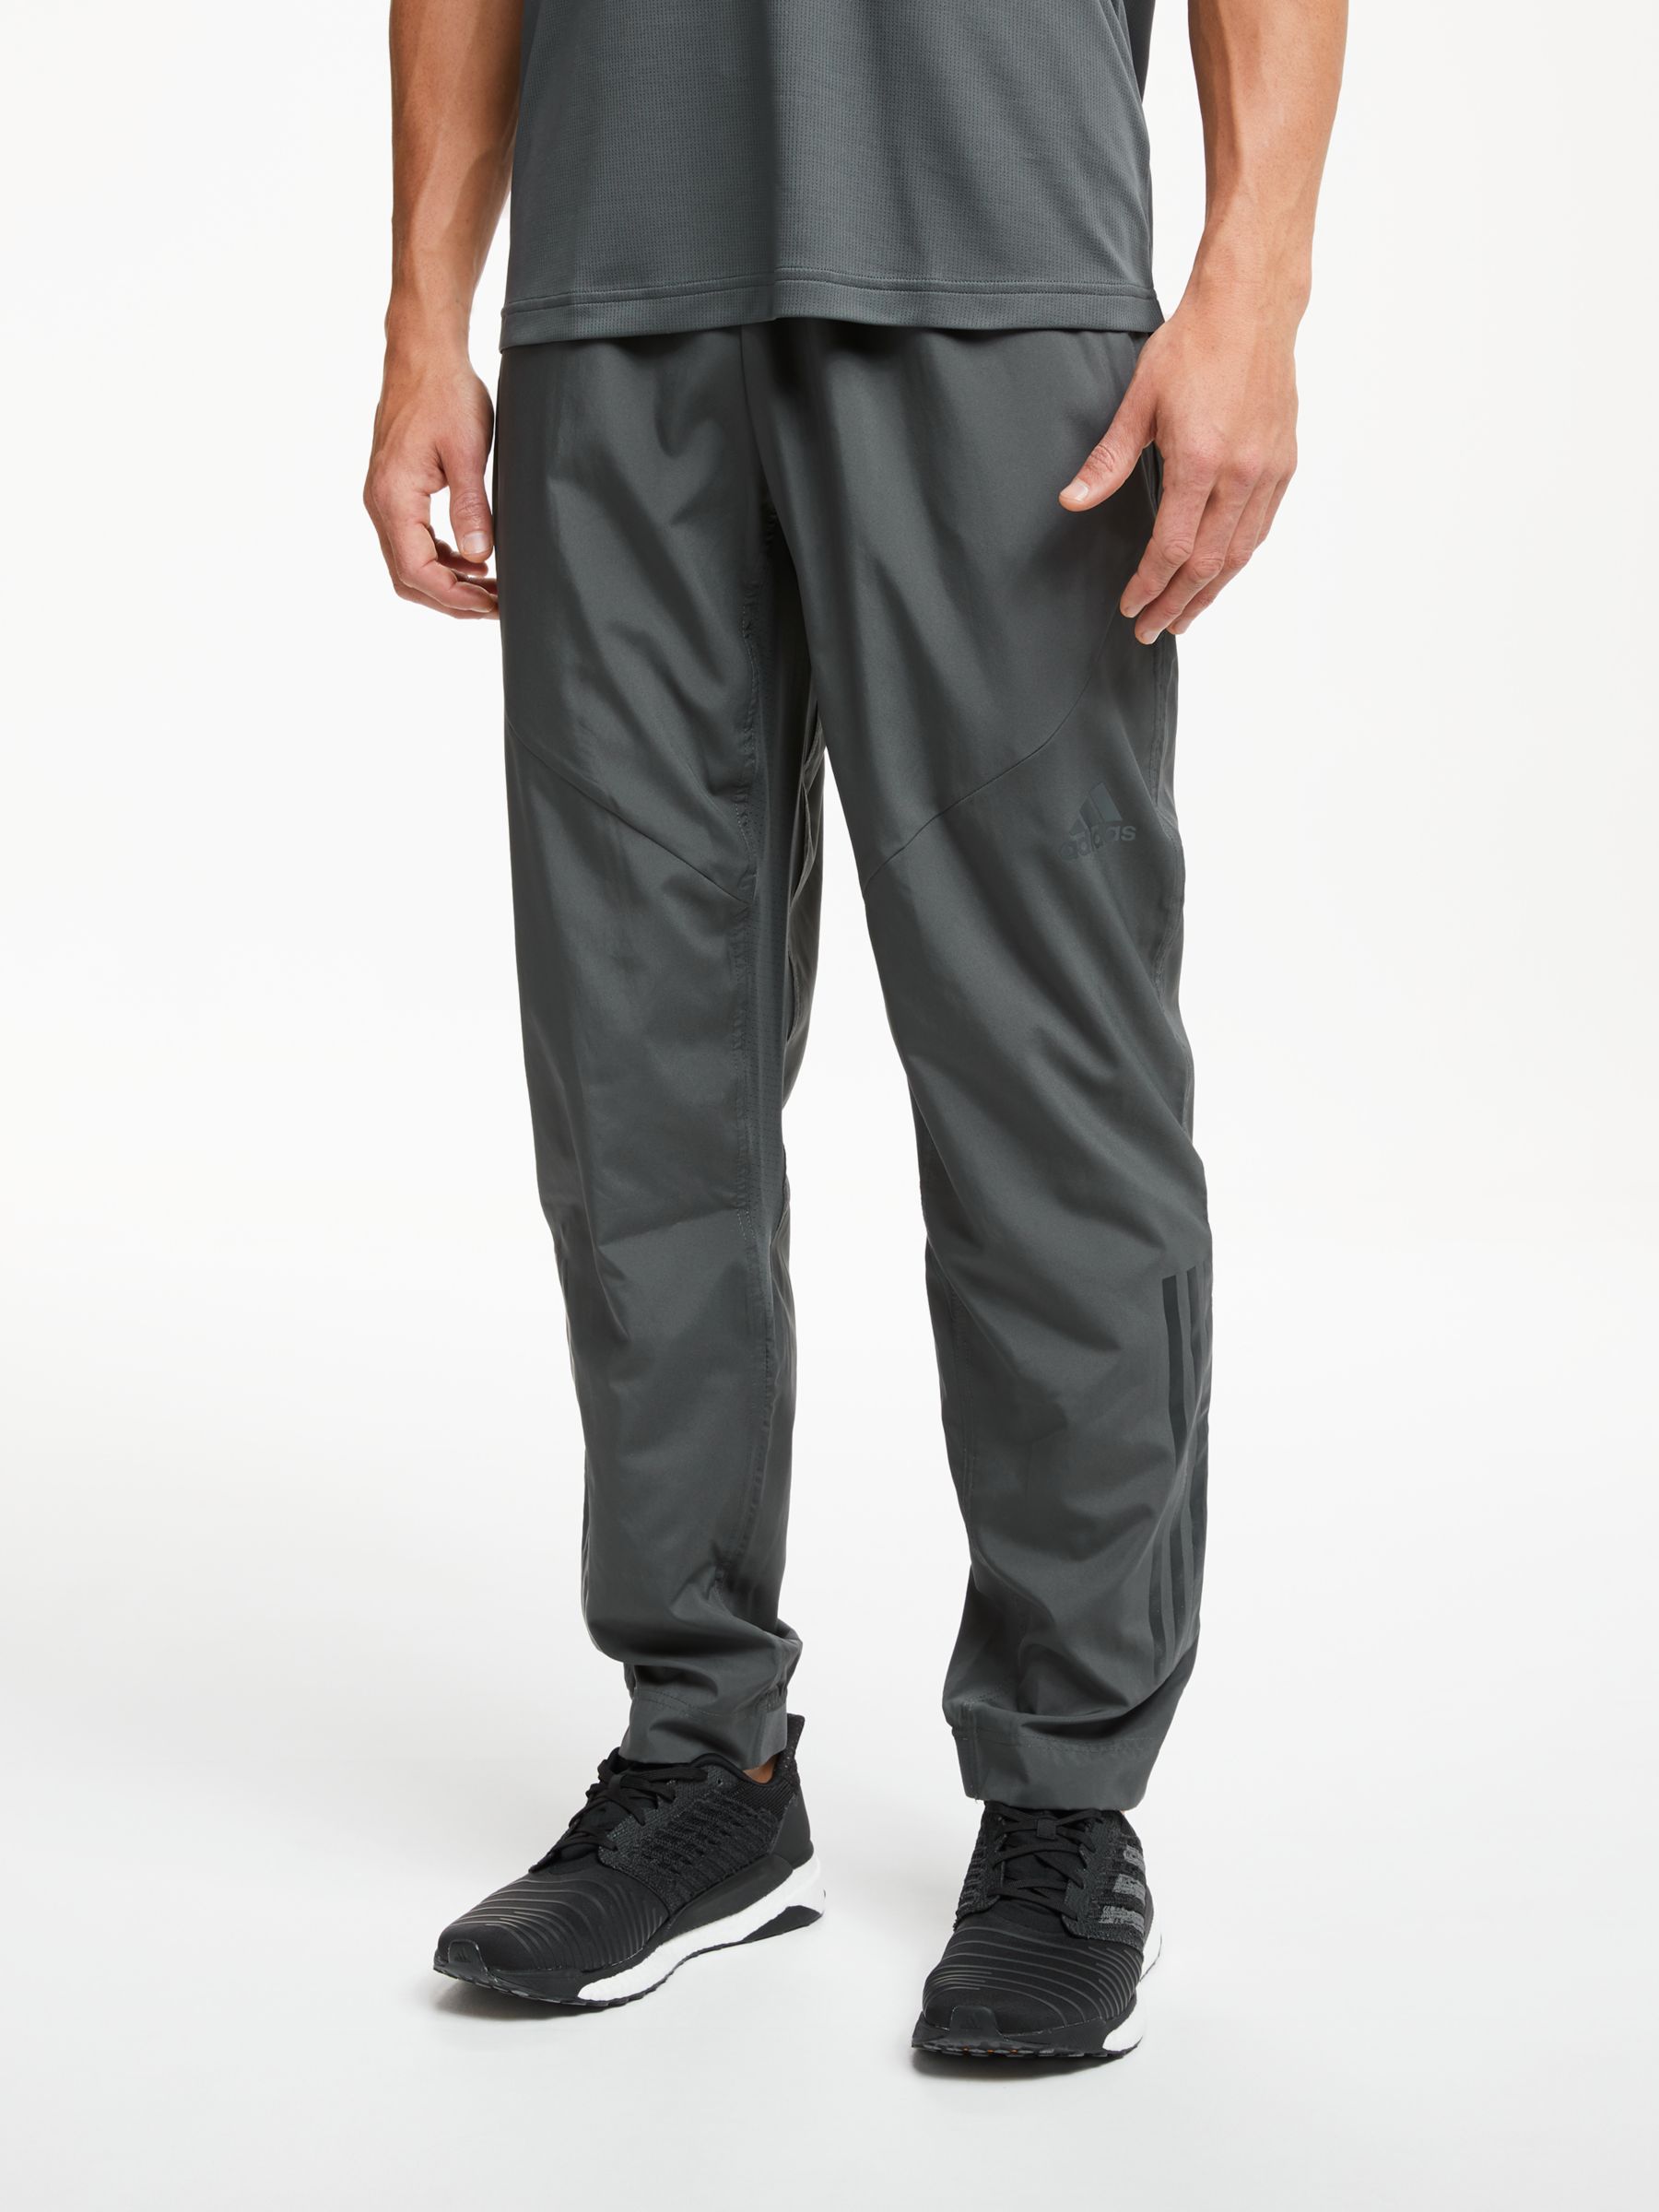 adidas Men's Climacool Practice Pants, Dark Grey 